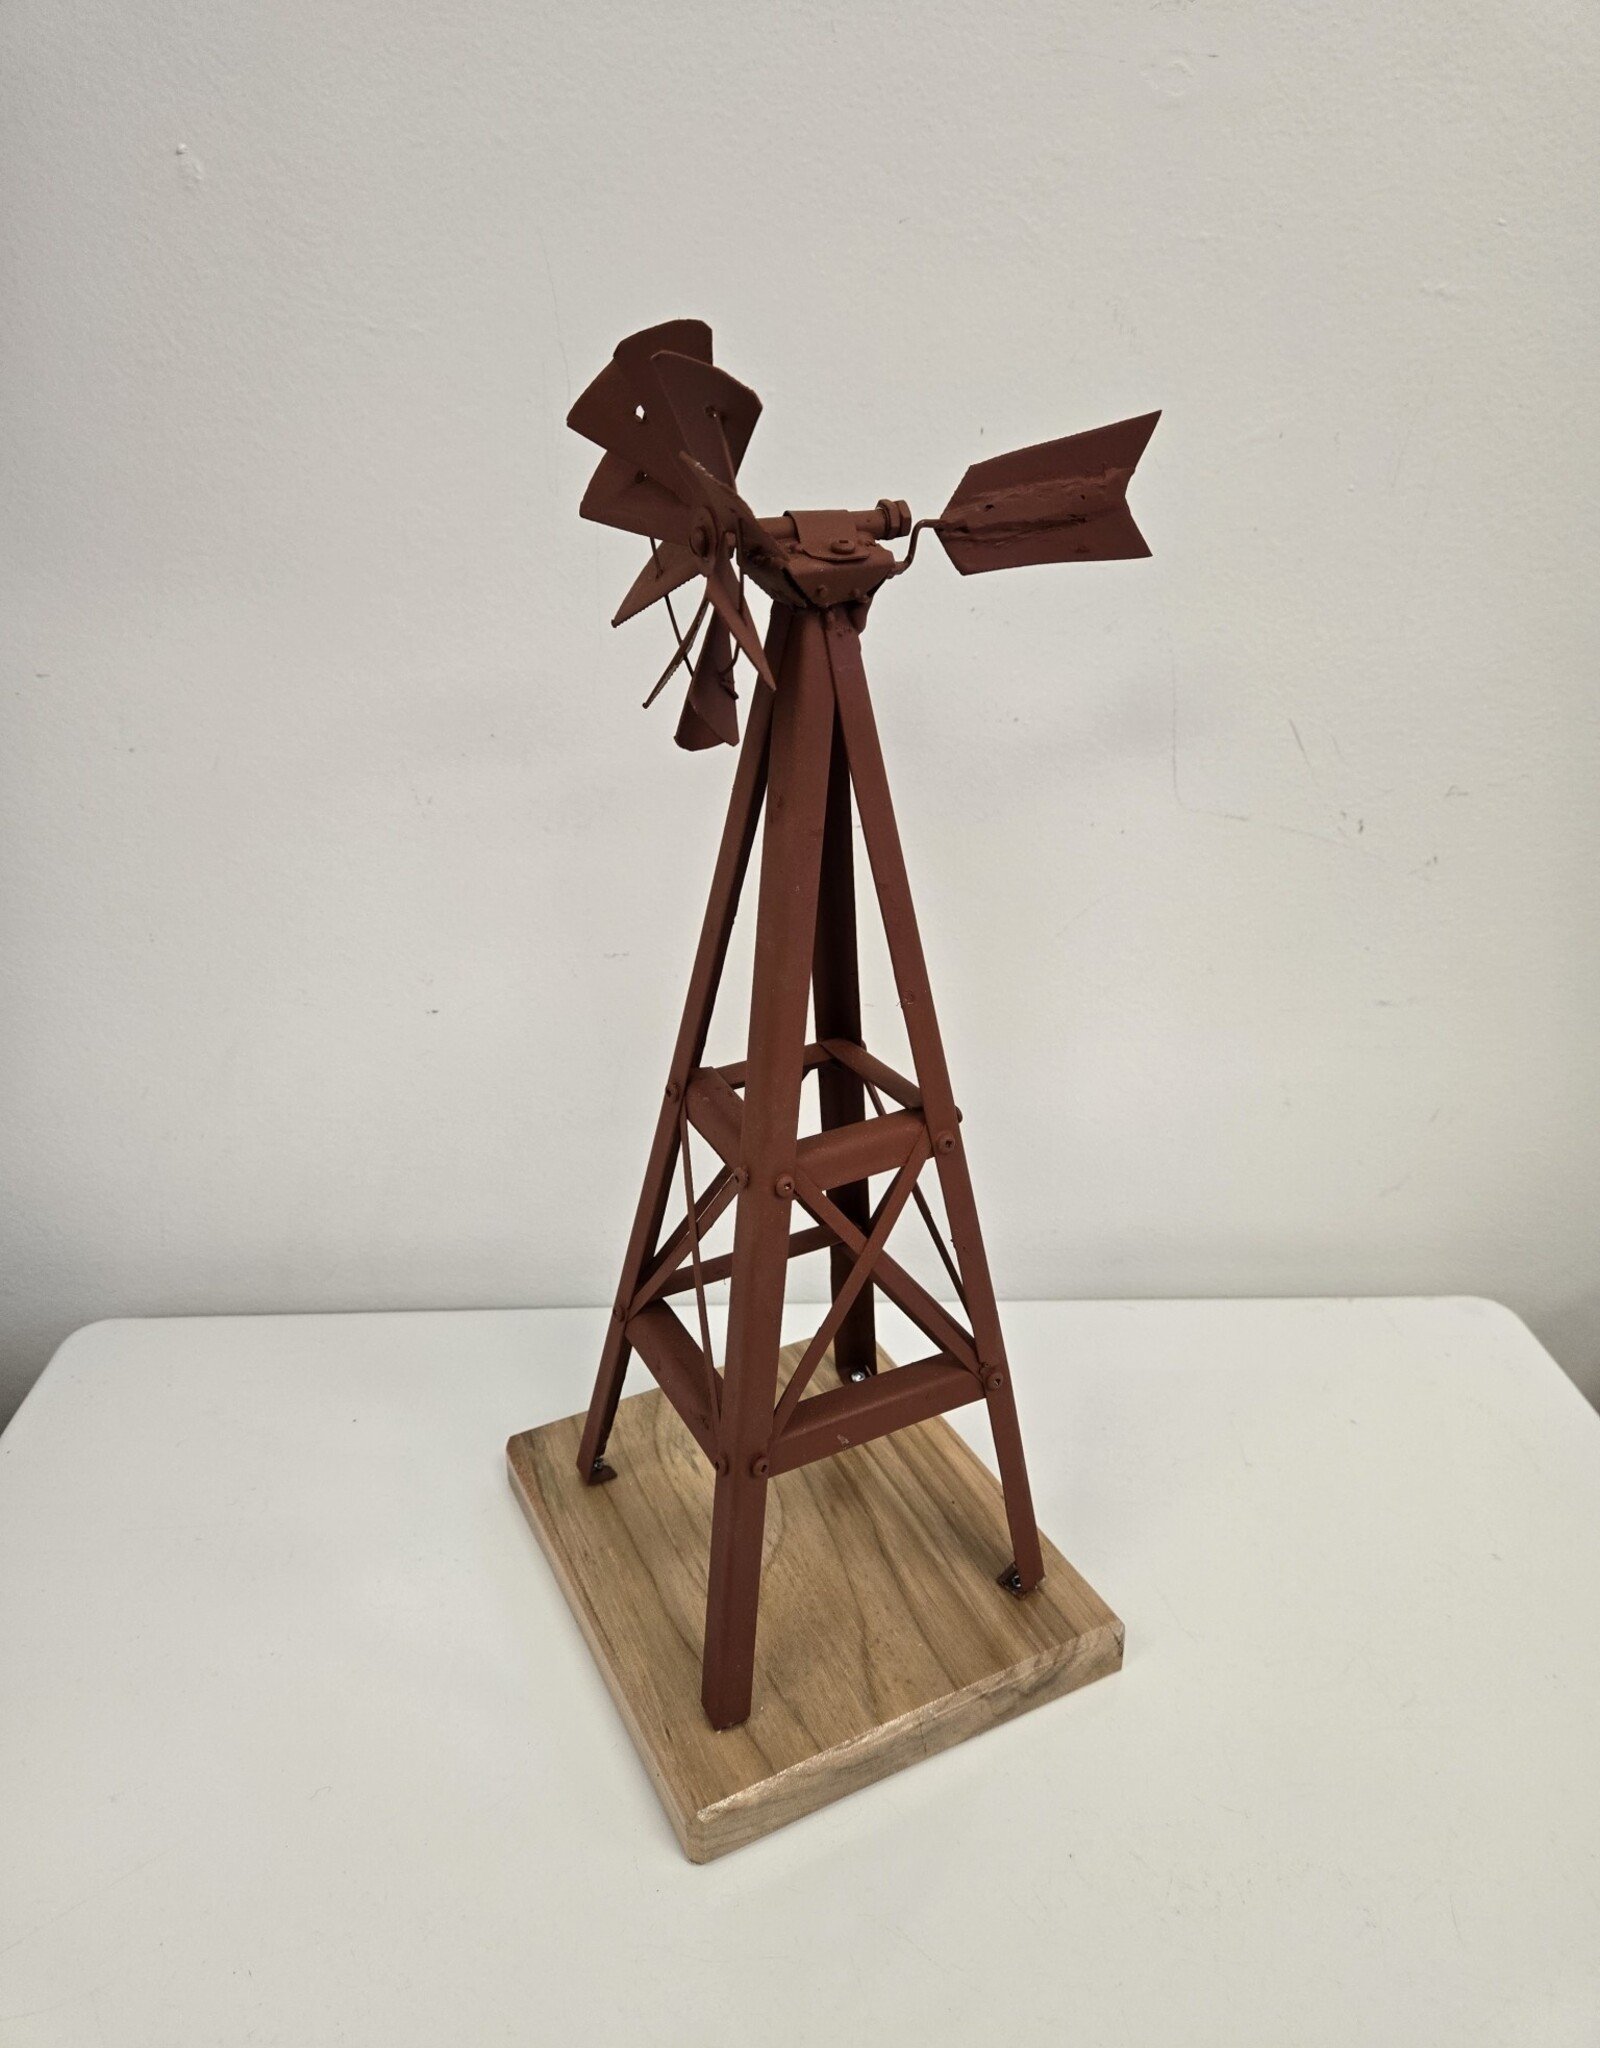 Small Handmade Windmill w/wooden base